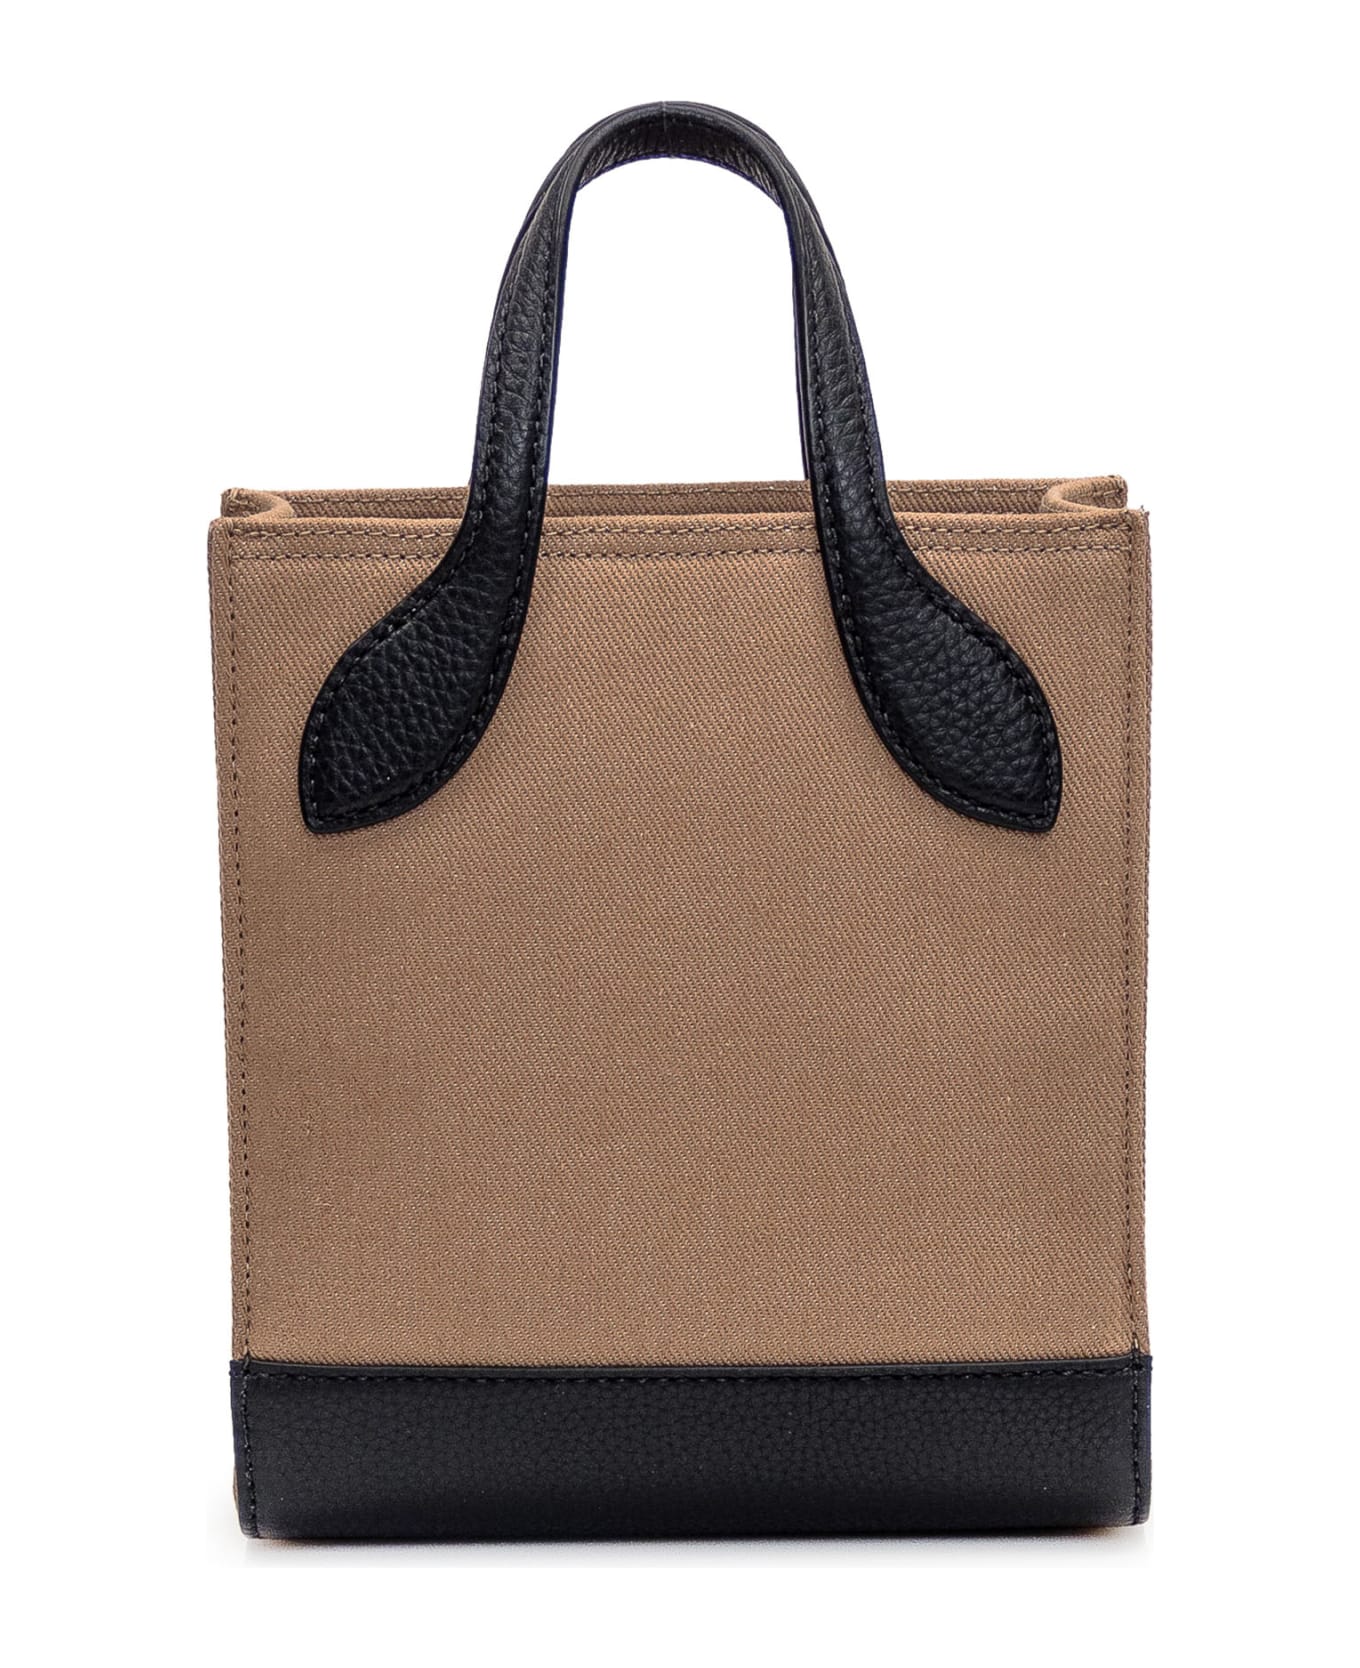 Bally Bag With Logo - SAND/BLACK+ORO トートバッグ